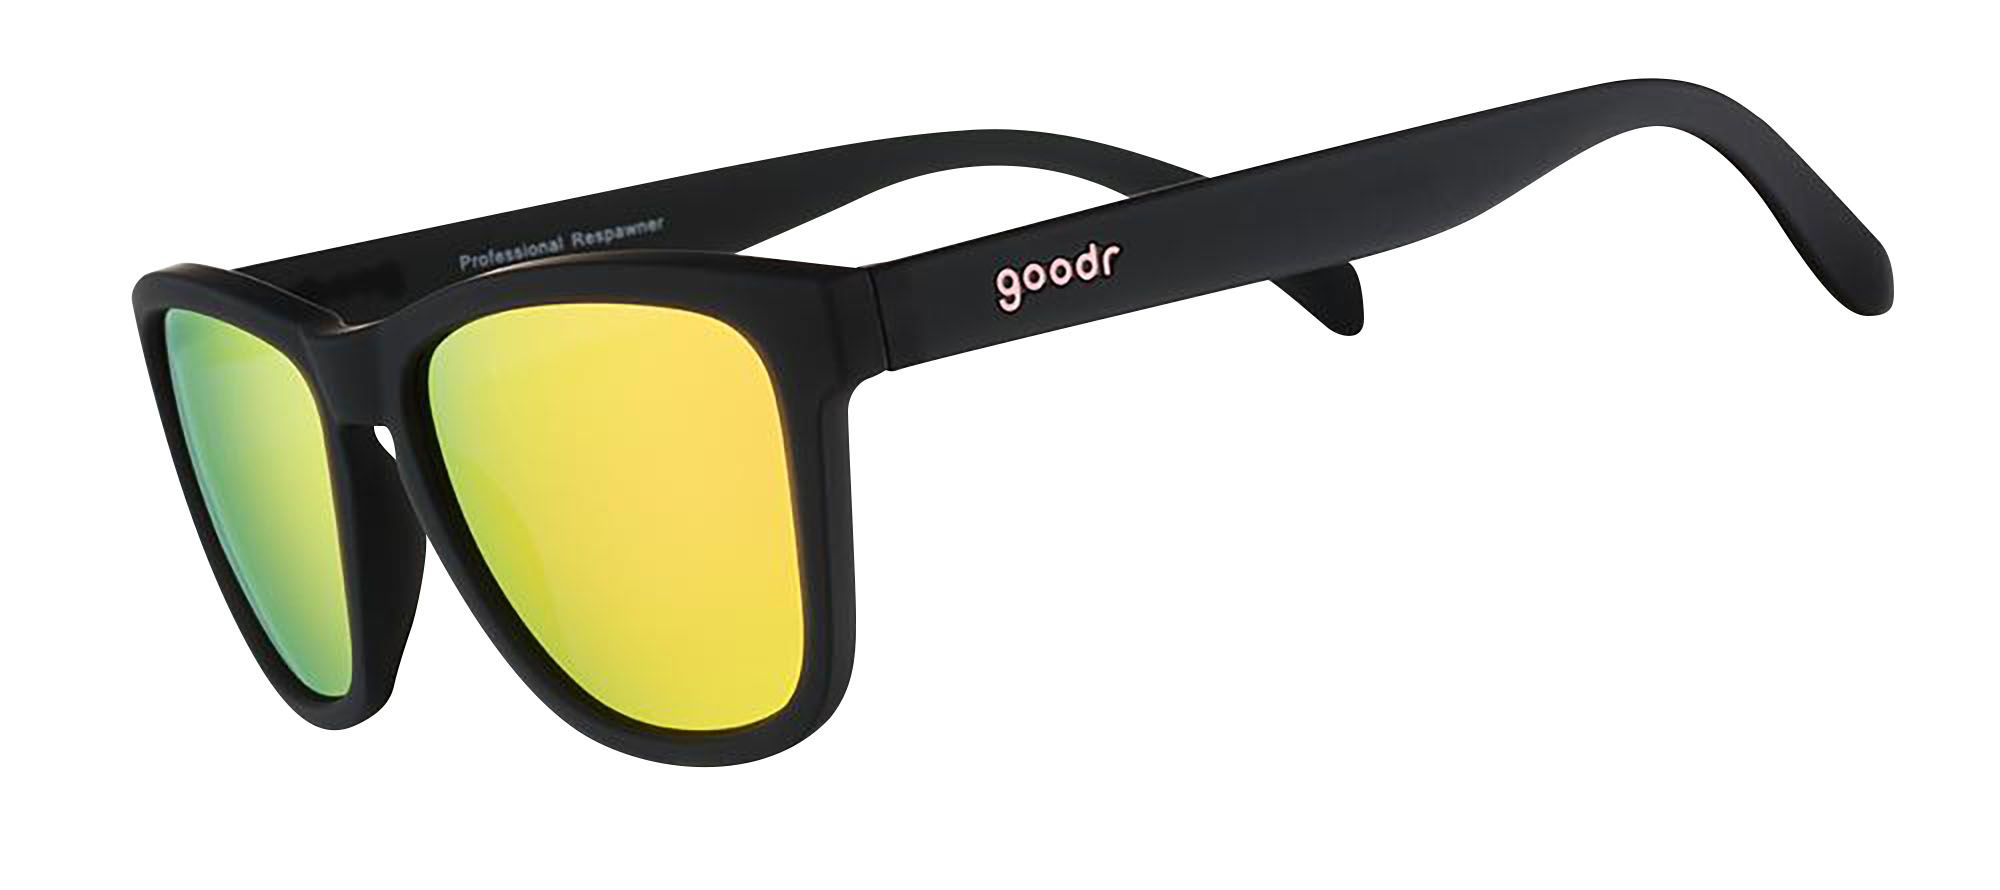 Photos - Sunglasses Goodr Professional Respawner Polarized Reflective , Men's 24AVJA